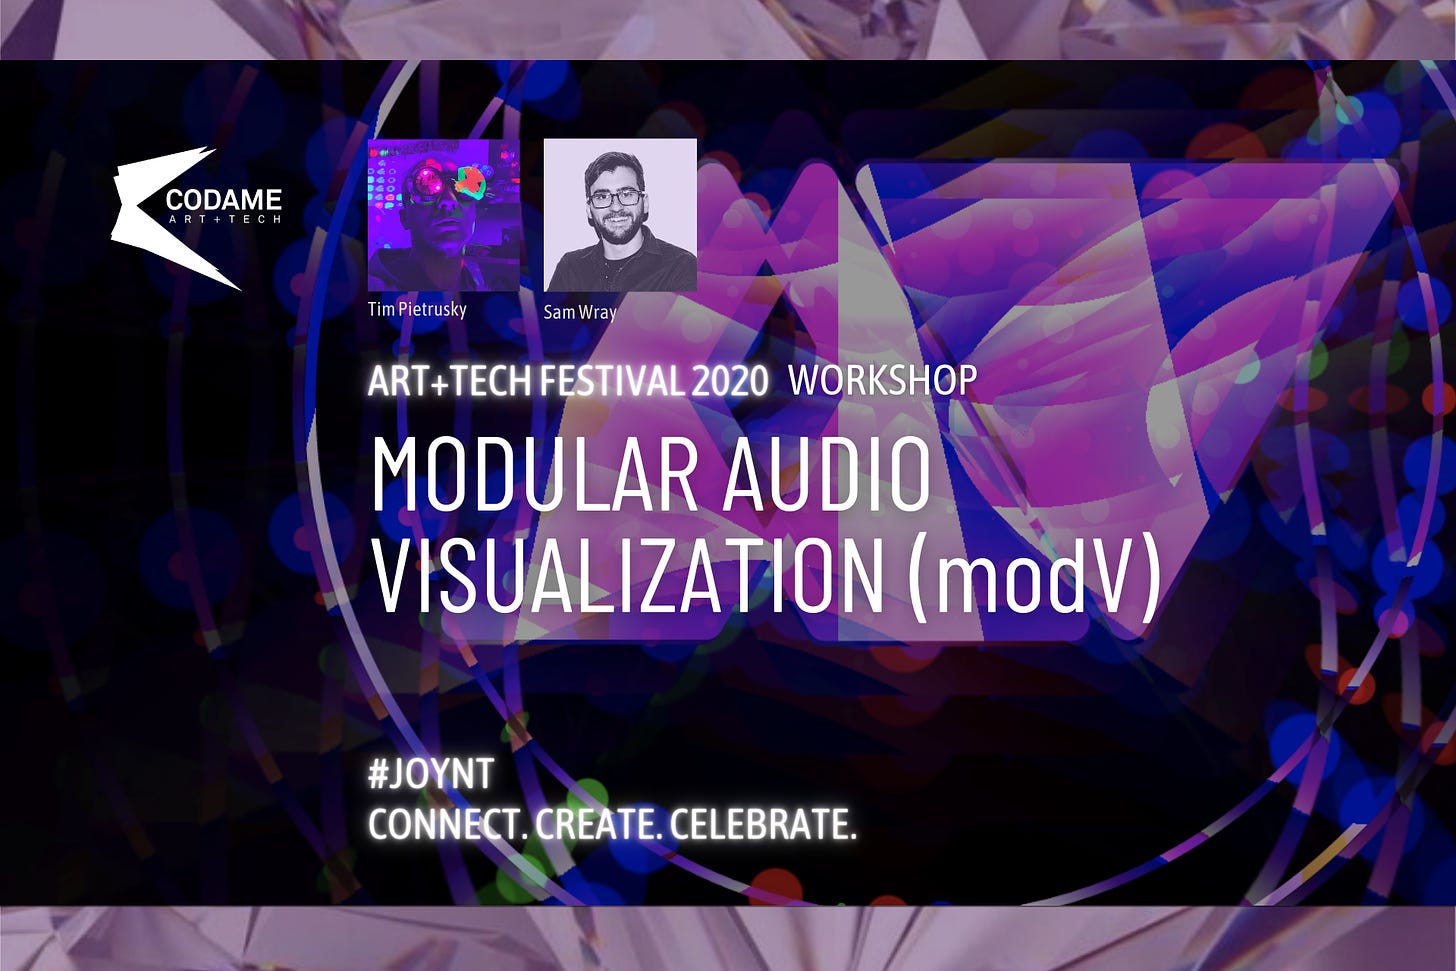 Modular Audio Visualisation with modV